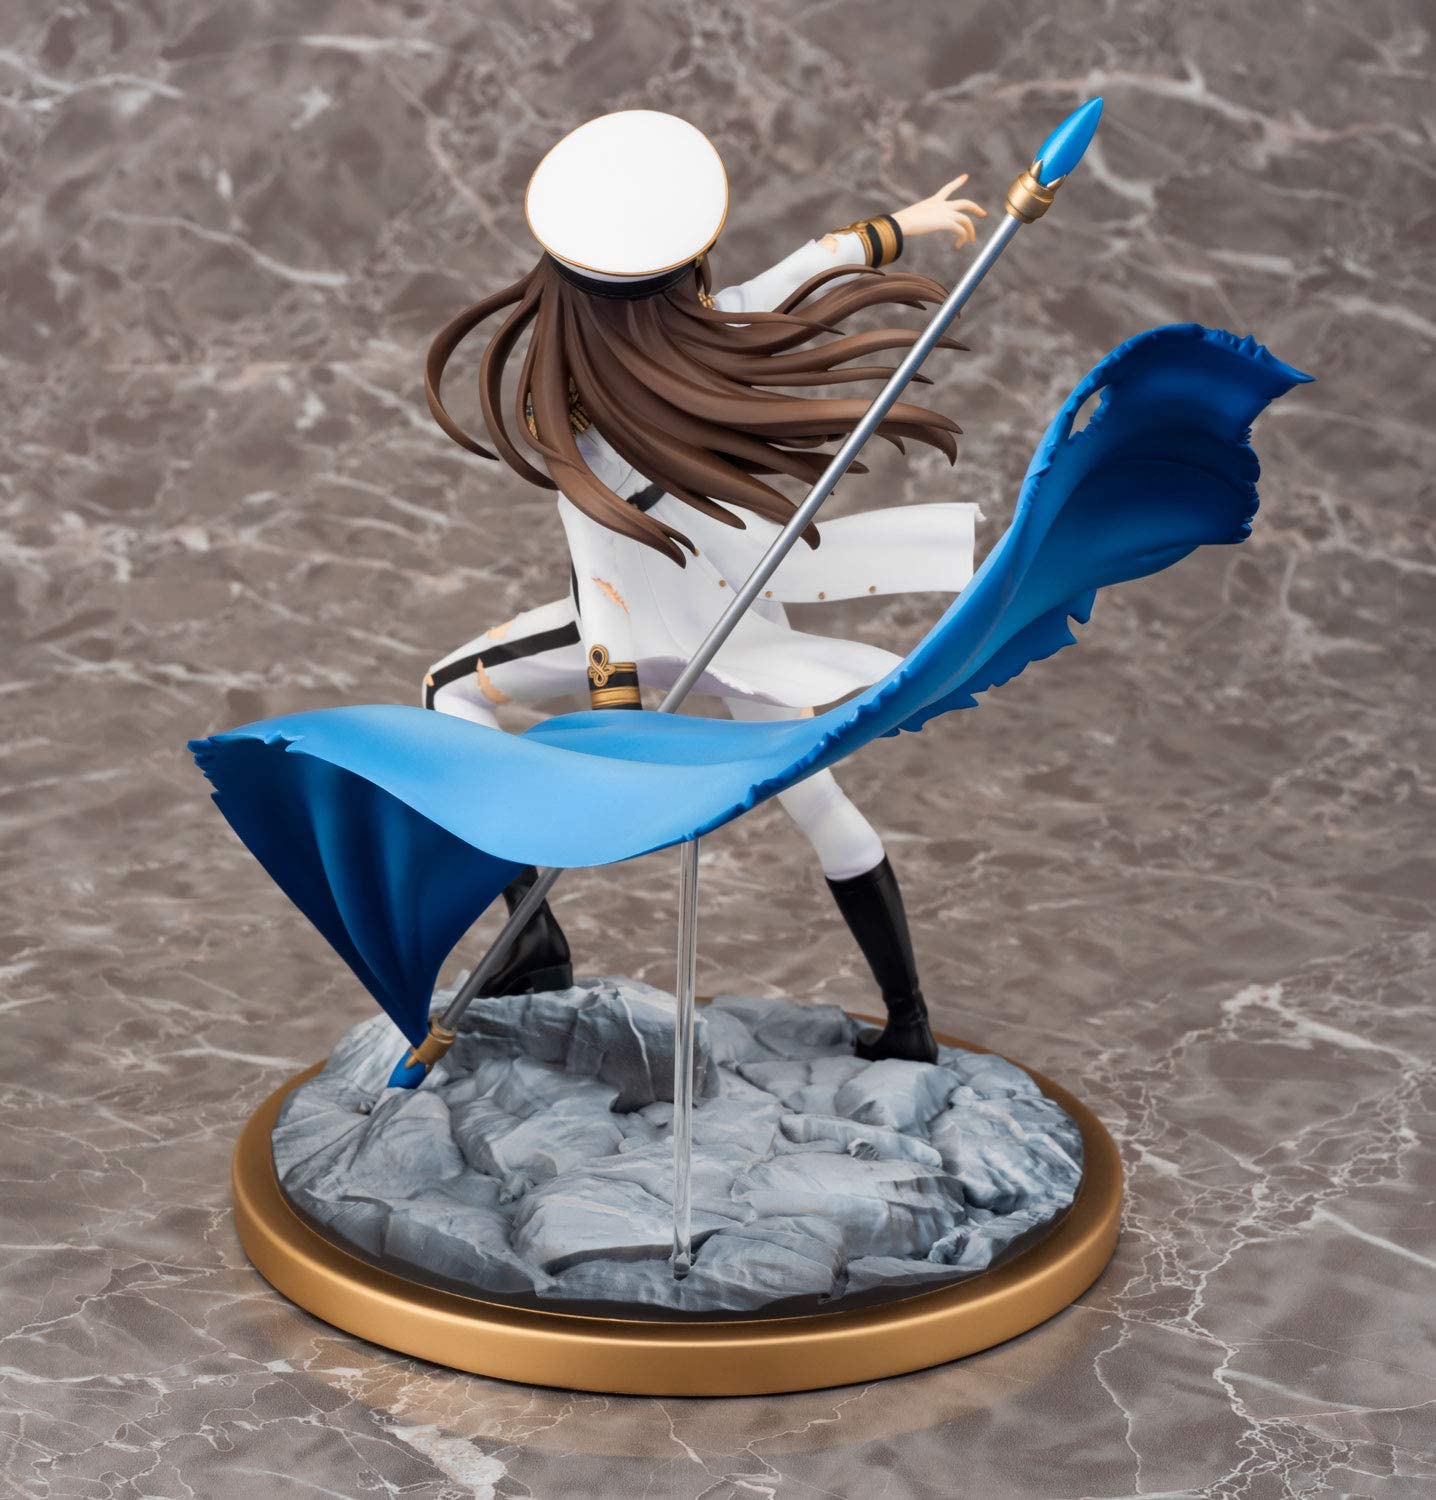 THE IDOLM@STER Cinderella Girls Minami Nitta Seizon Honnou Valkyria ver. 1/8 Complete Figure | animota